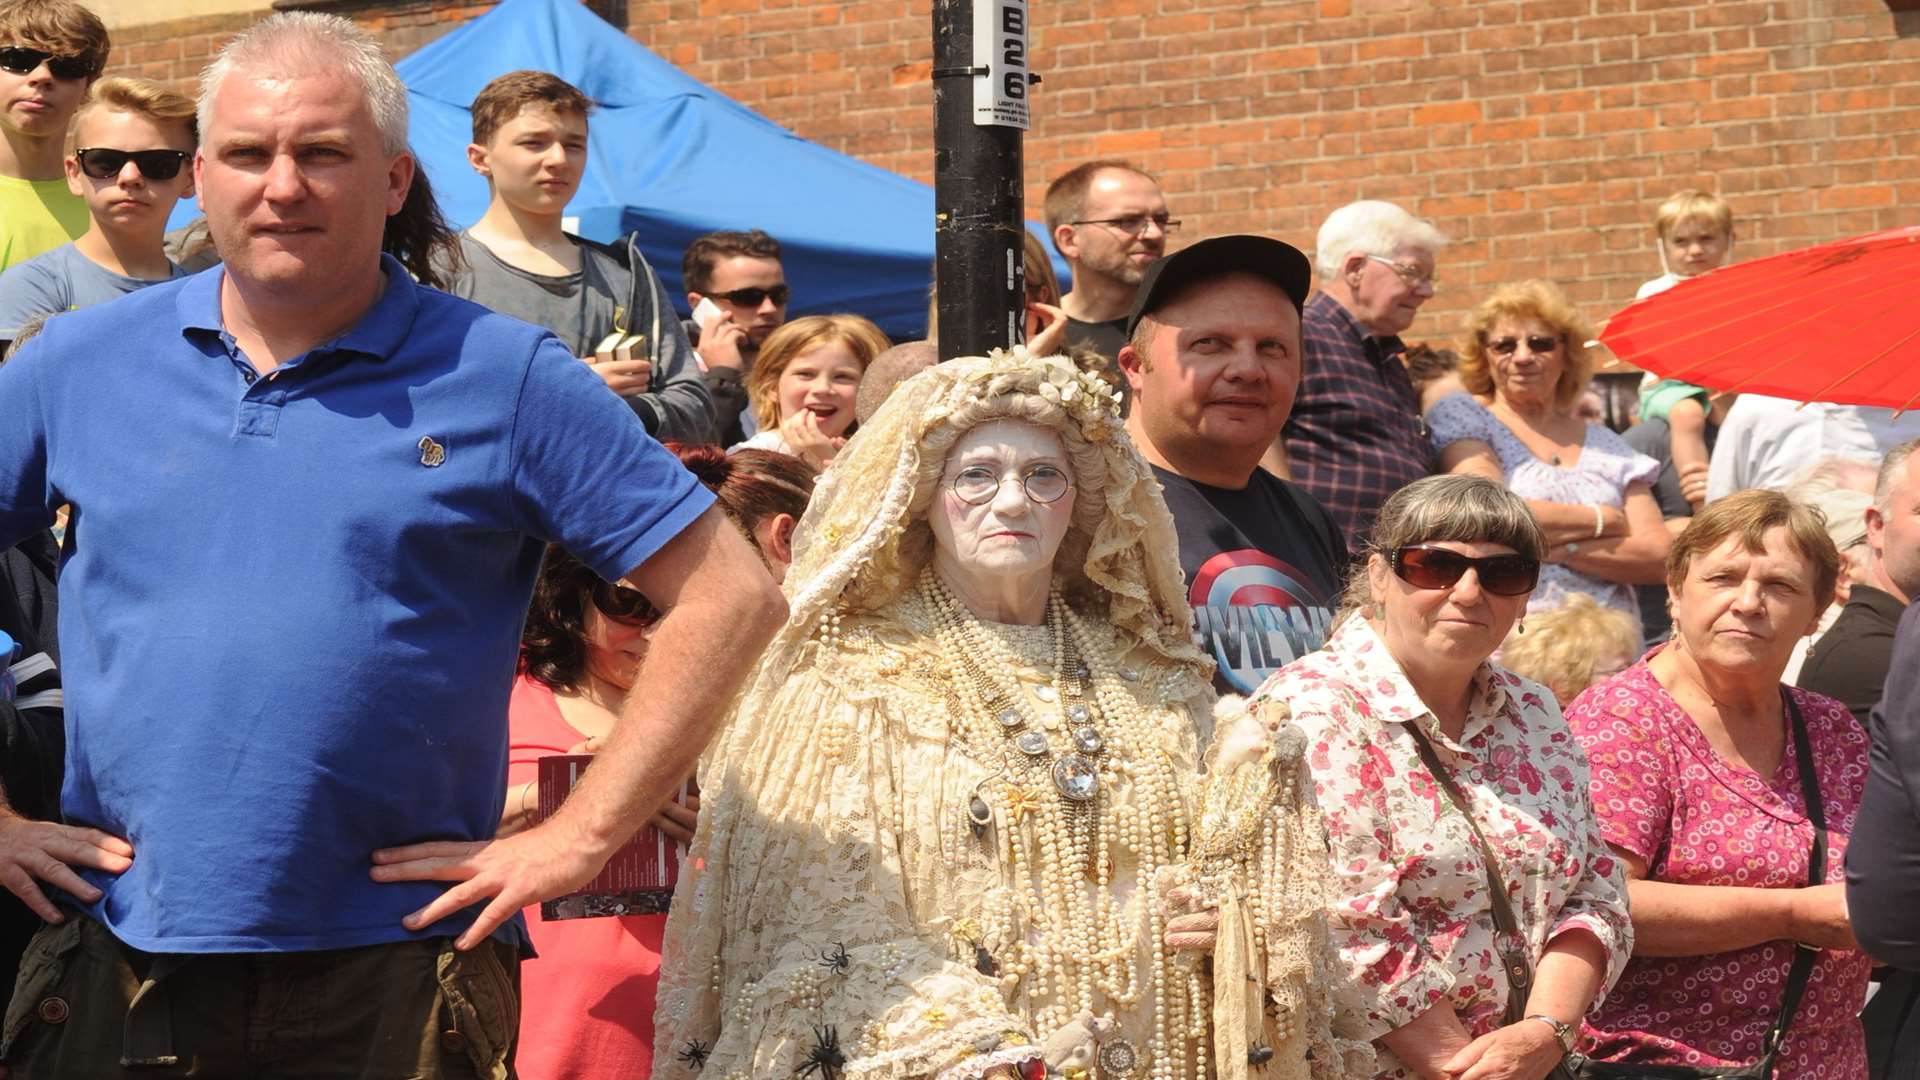 Miss Havisham blends with the crowd. Picture: Steve Crispe